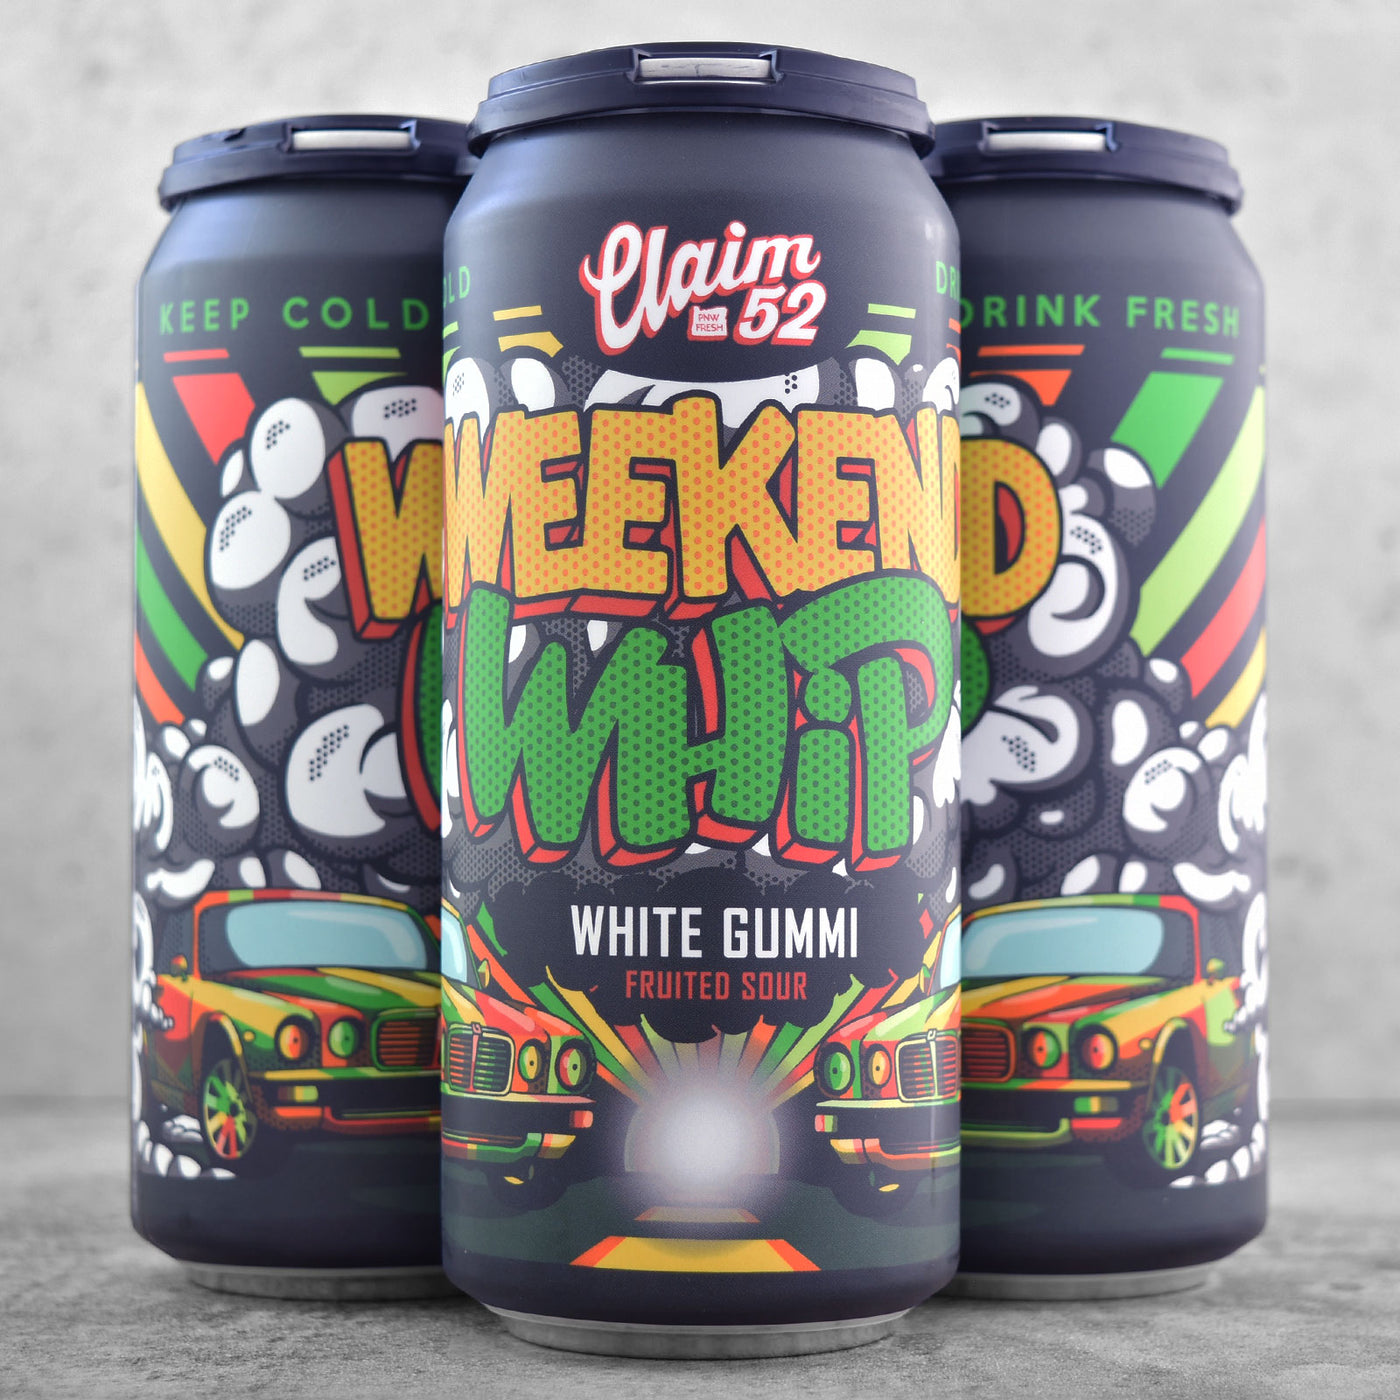 Claim 52 Weekend Whip: White Gummi